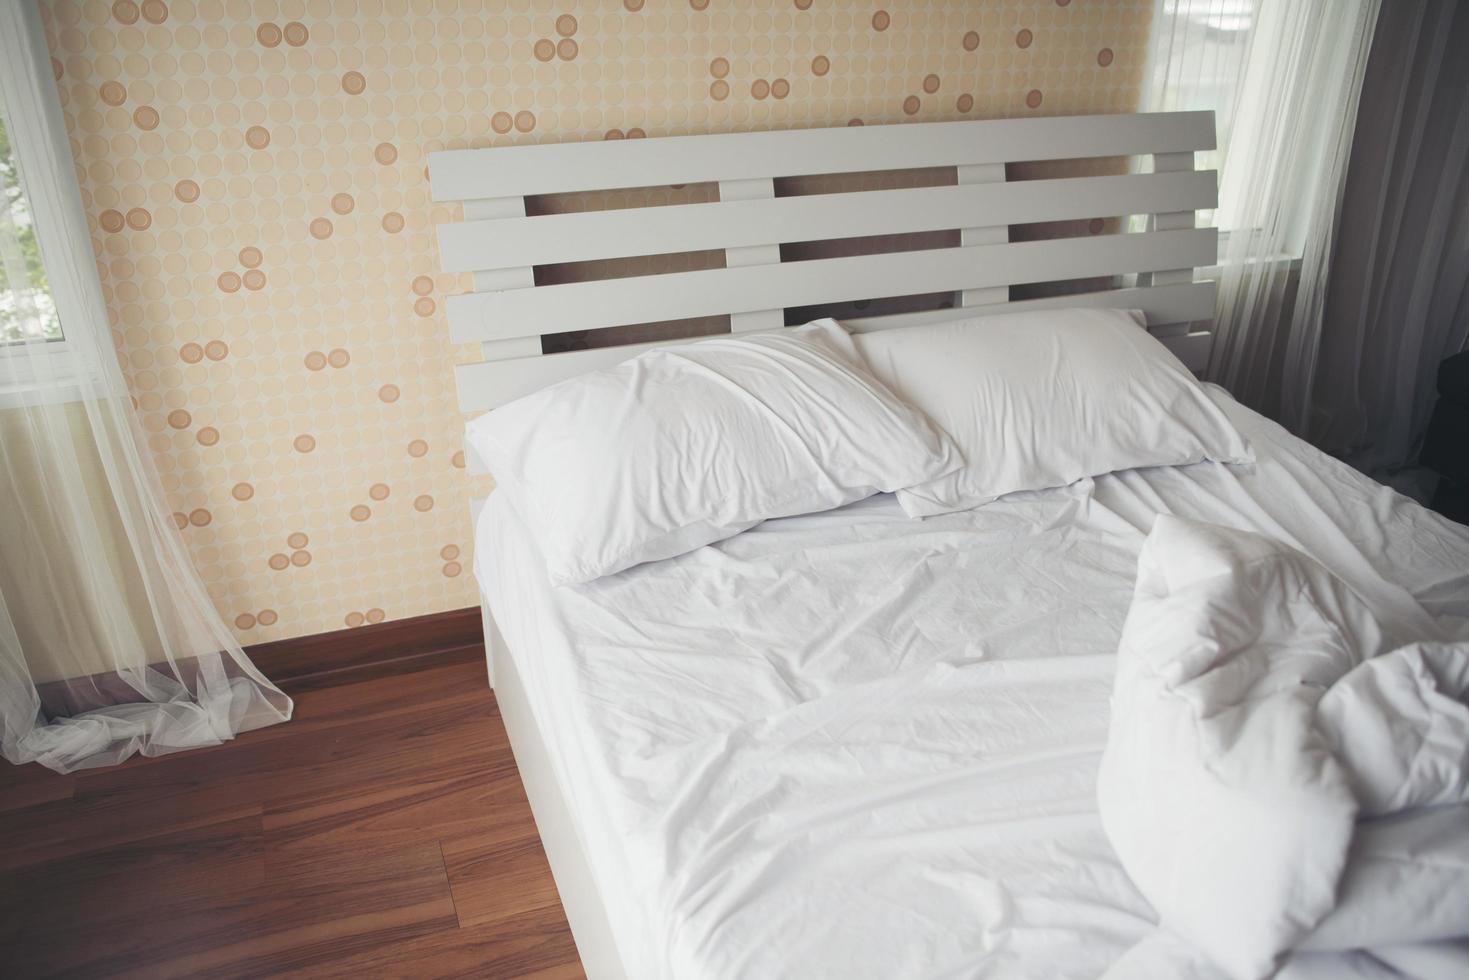 Crumpled bedsheets in the bedroom photo